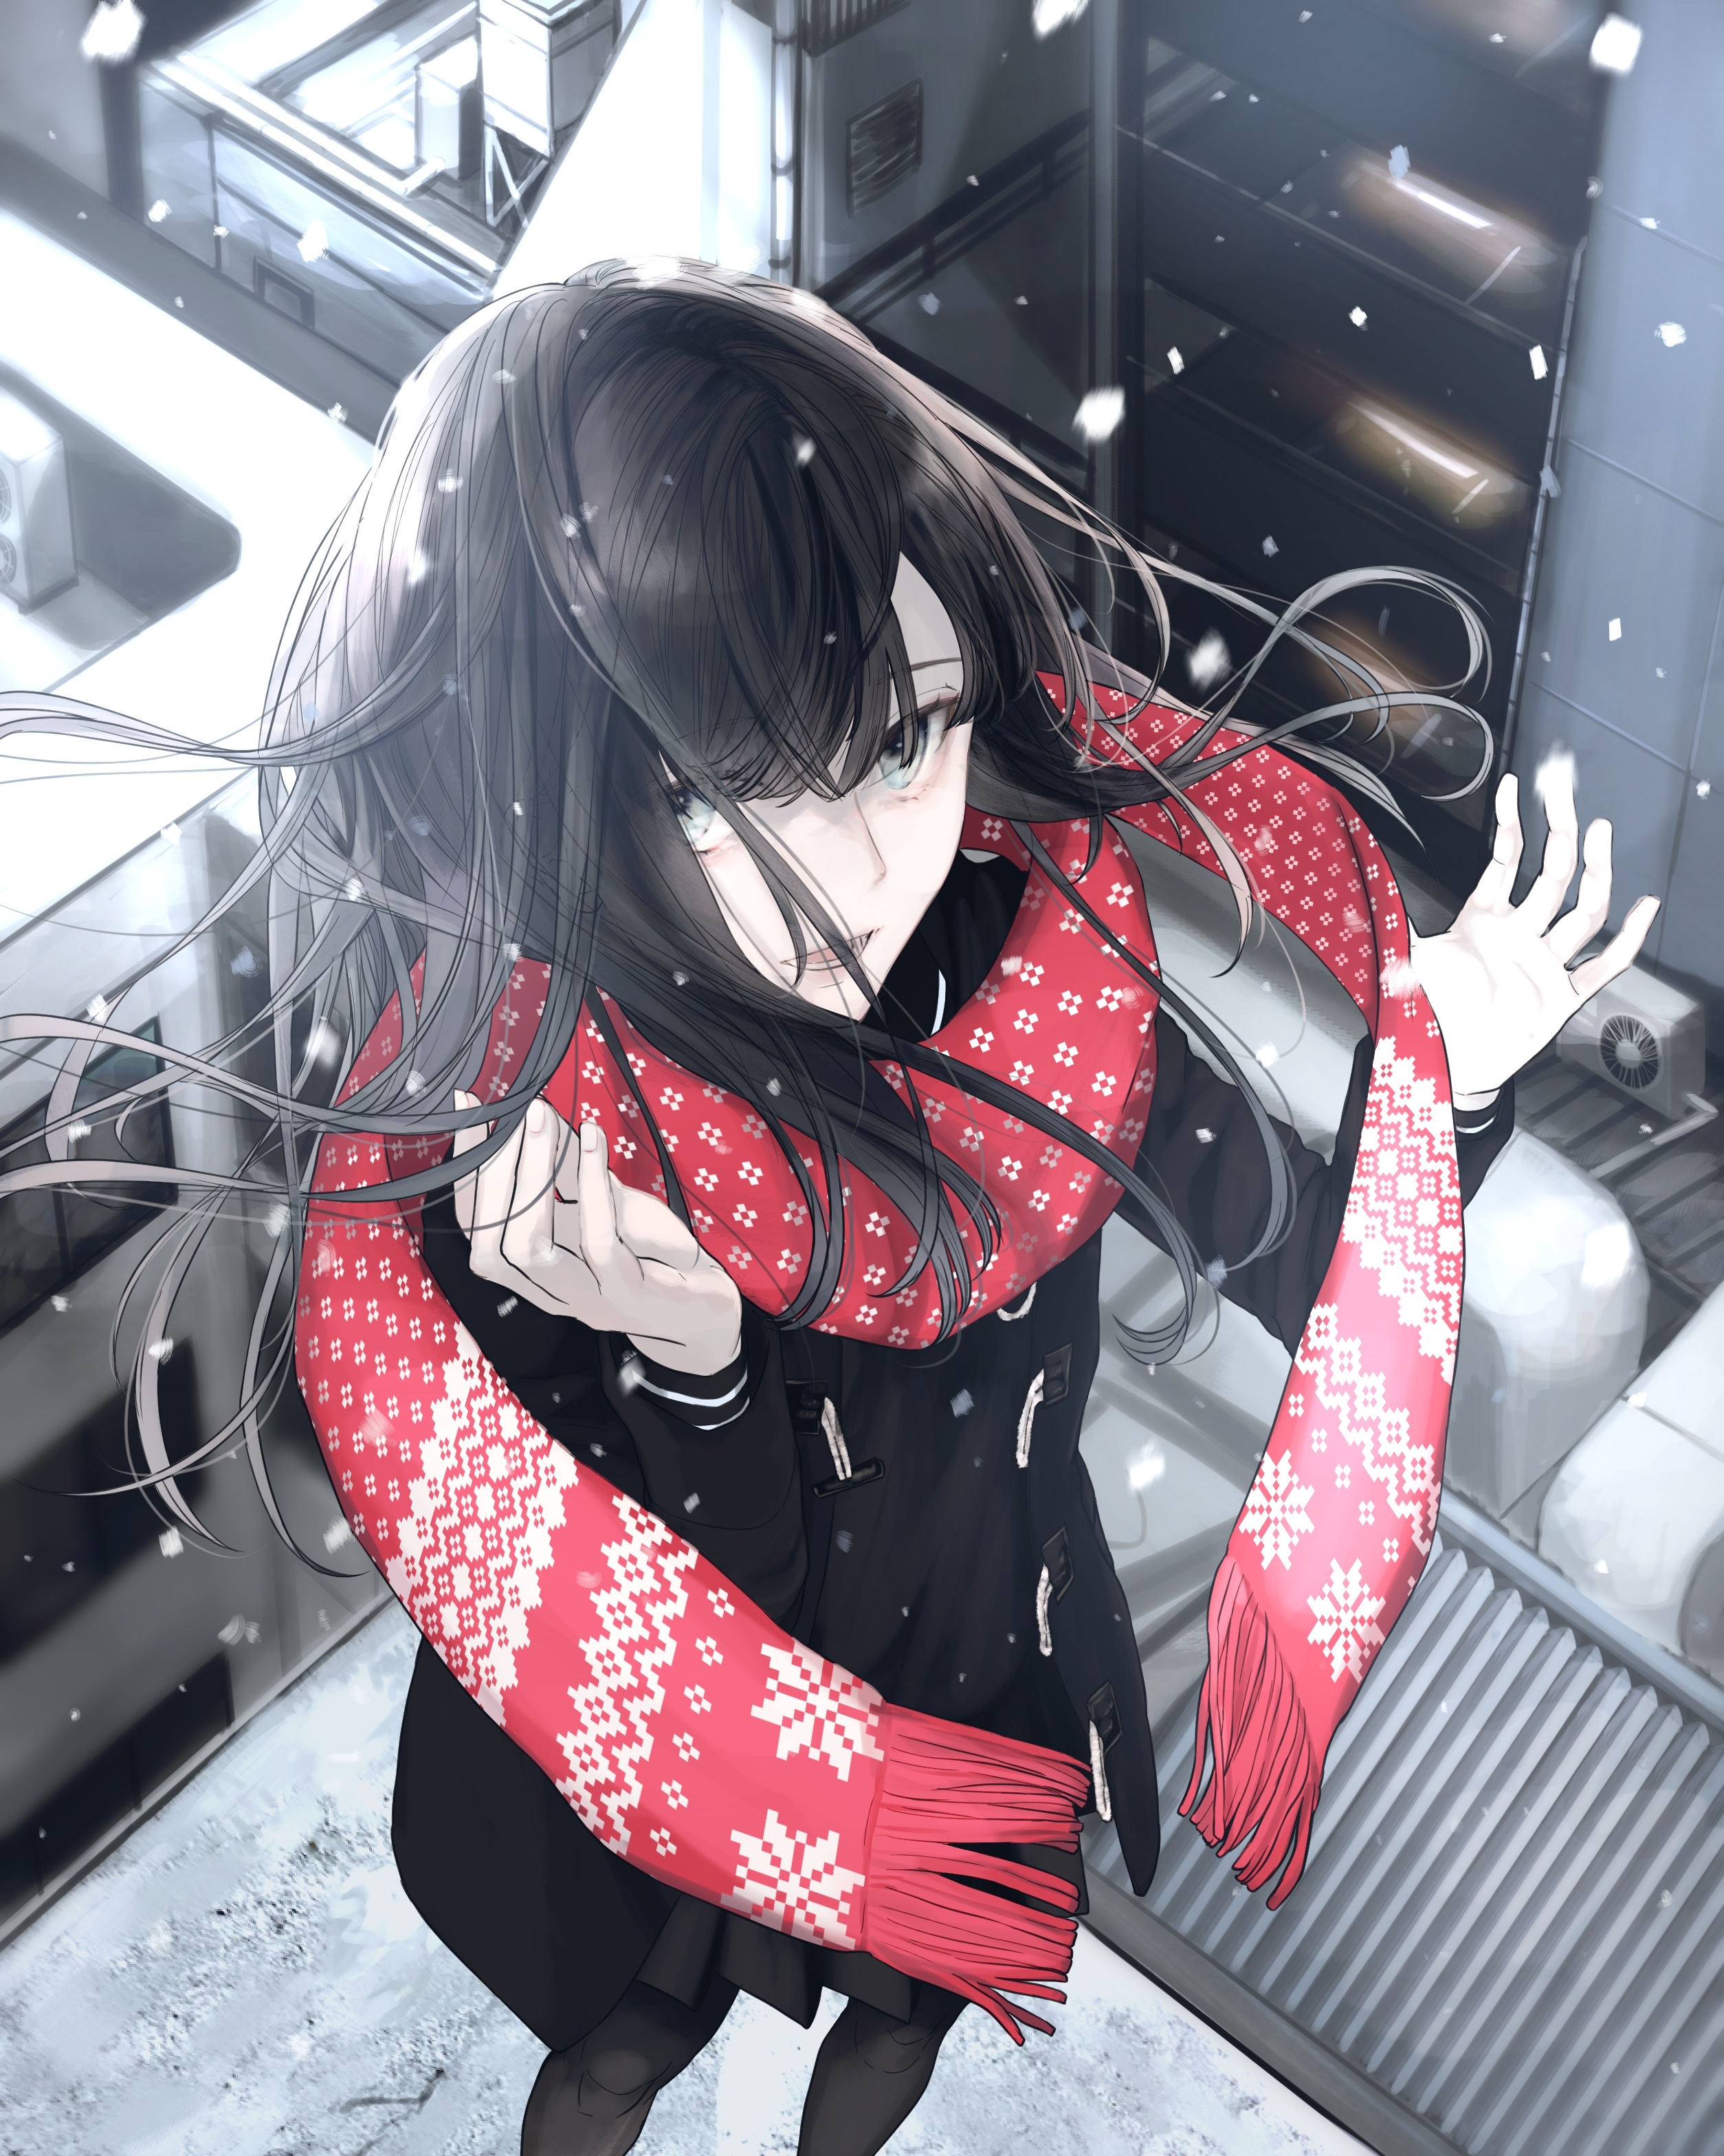 Wallpaper red scarf, beautiful, autumn, anime girl desktop wallpaper, hd  image, picture, background, e97766 | wallpapersmug